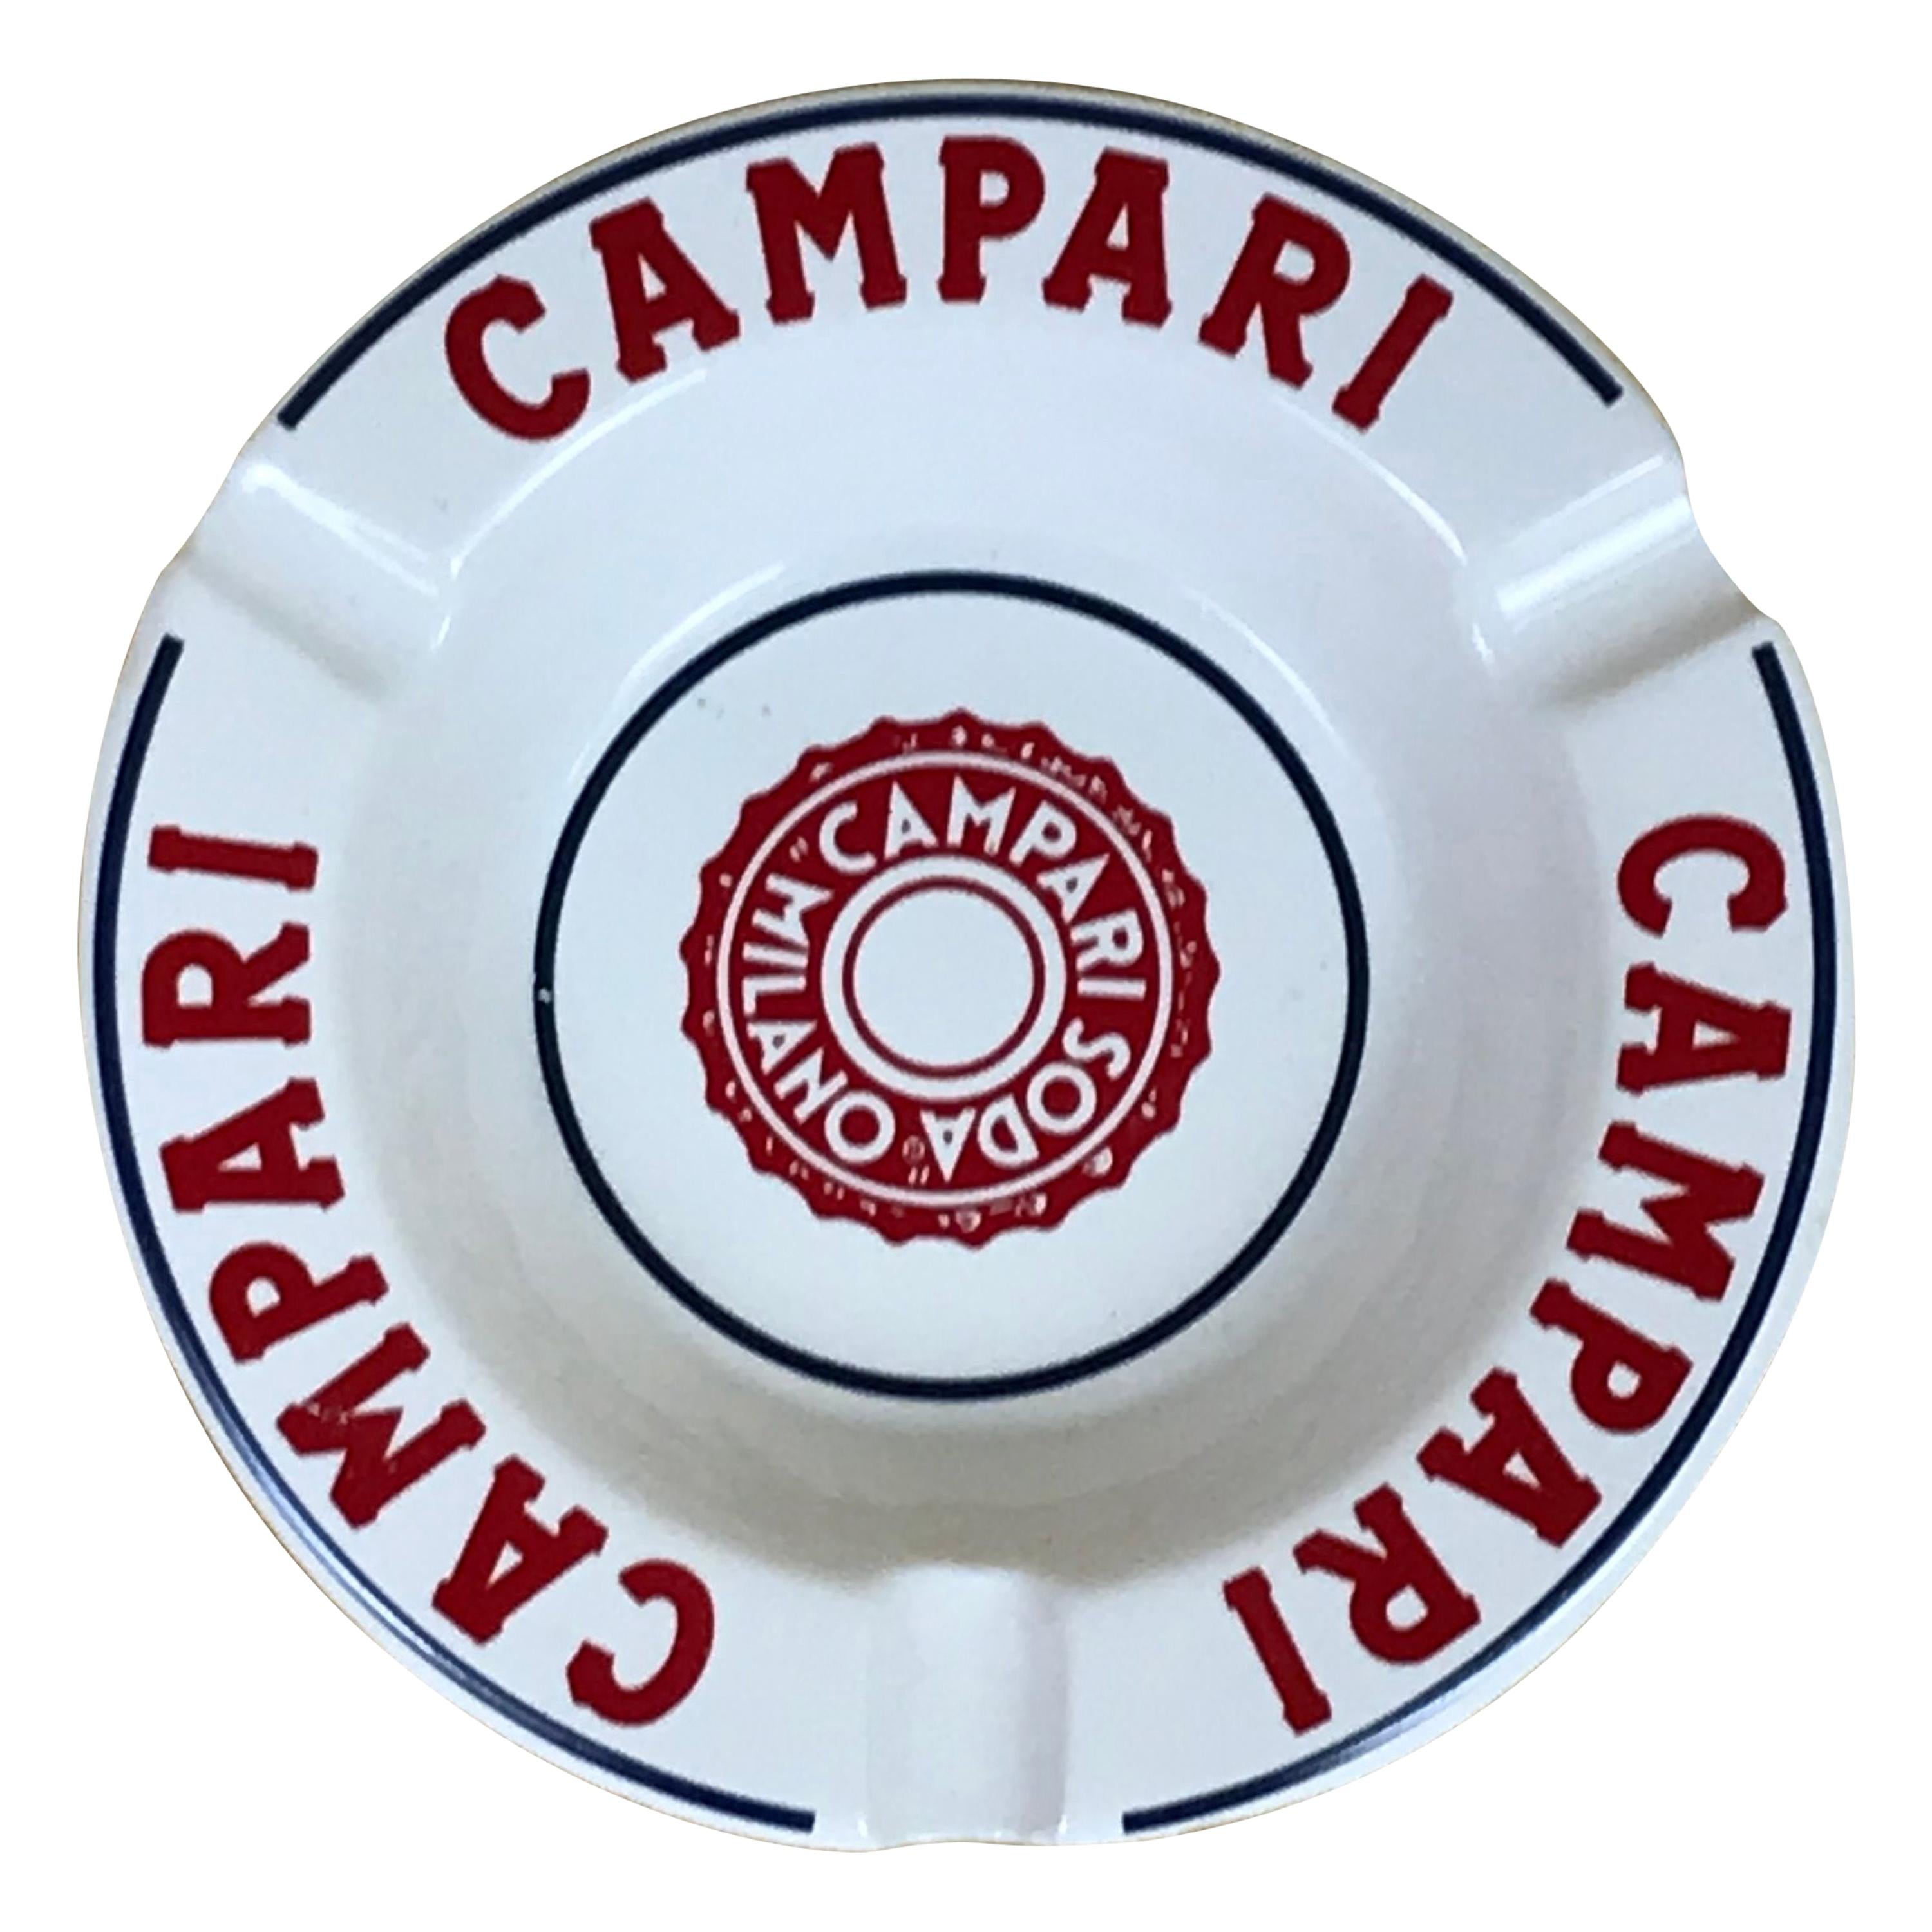 1970s Vintage Advertising Campari Soda Milano Ashtray in White and Red Ceramic im Angebot